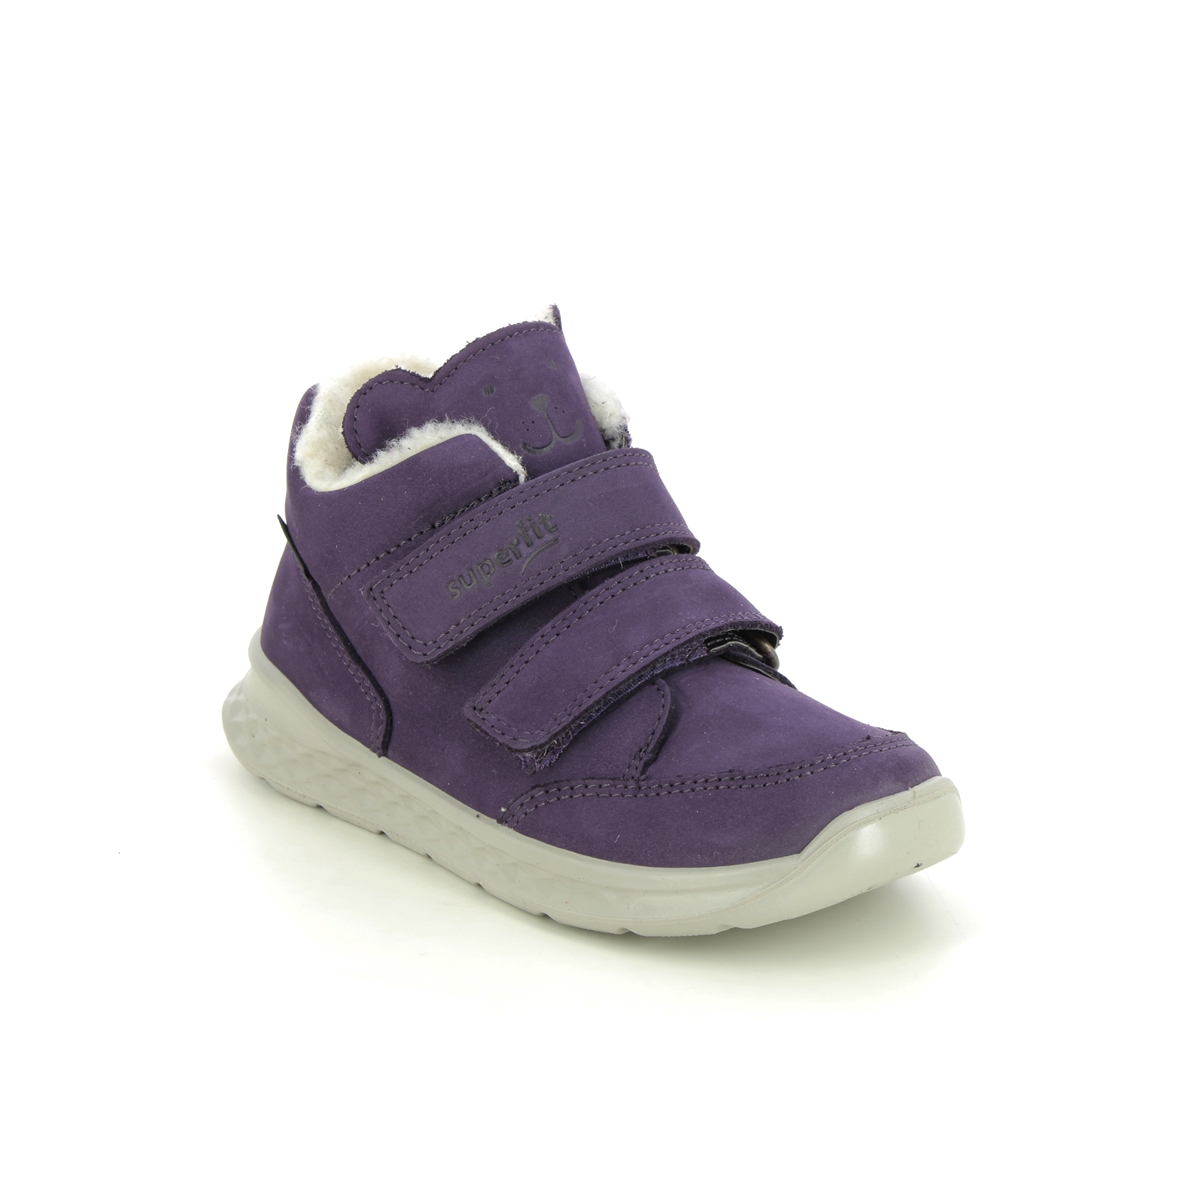 Superfit Breeze 2V Gtx Purple Nubuck Kids Toddler Girls Boots 1000372-8500 In Size 23 In Plain Purple Nubuck